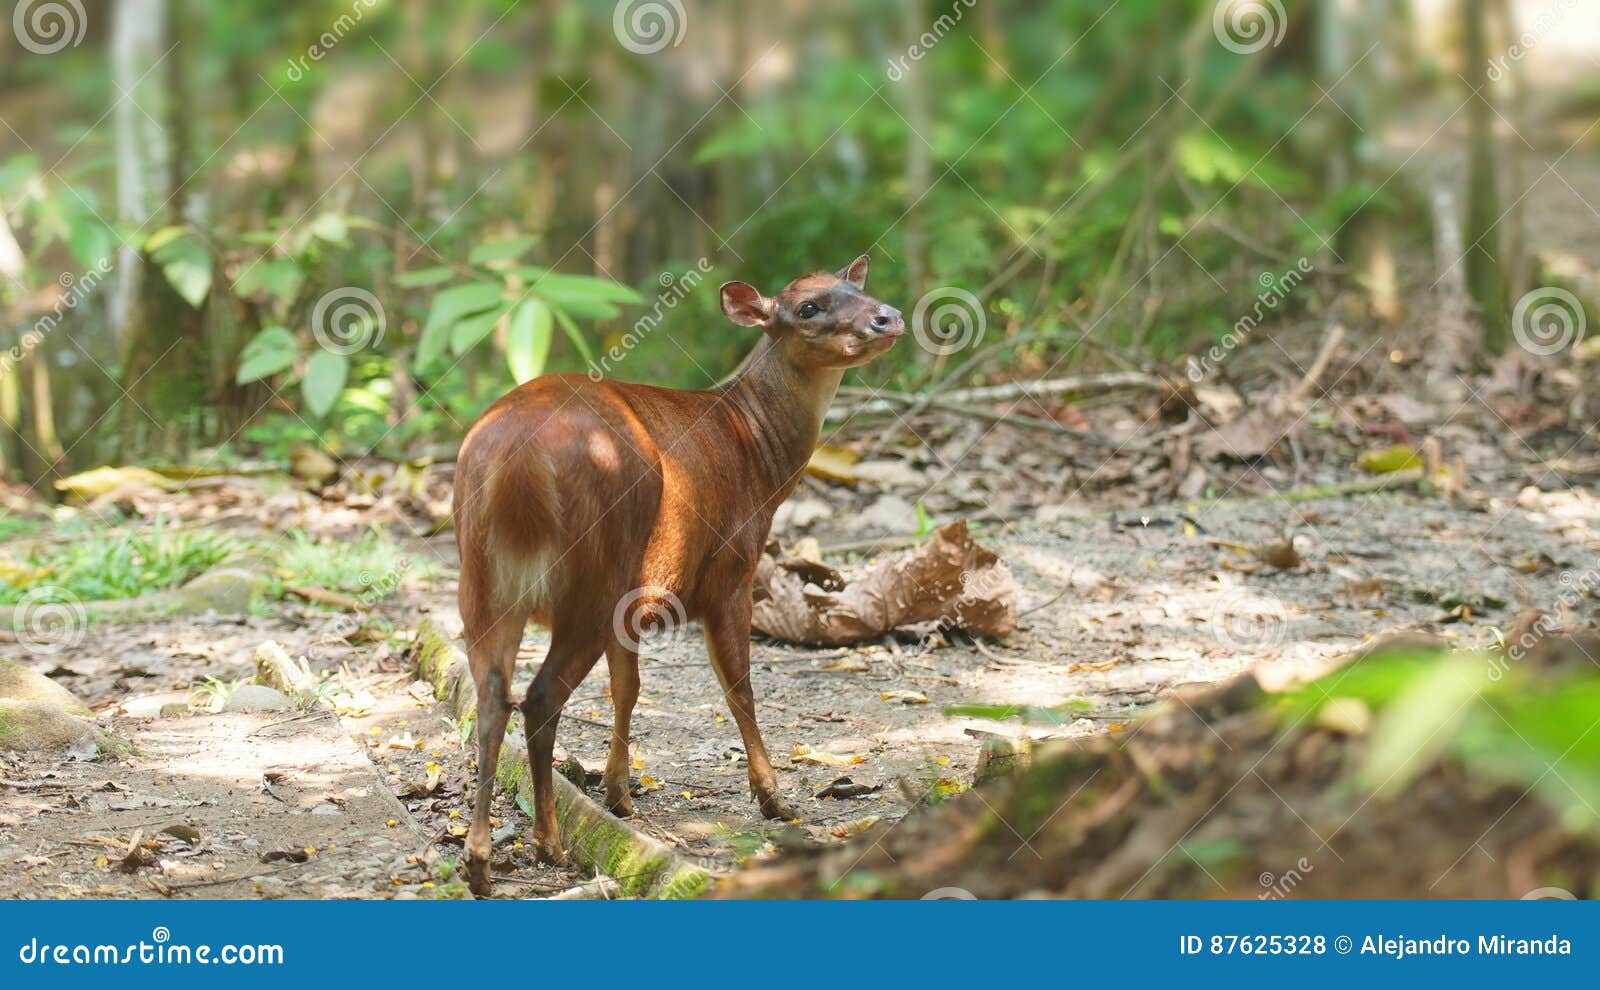 white-tailed deer in the jungle. common names: venado cola blanca.